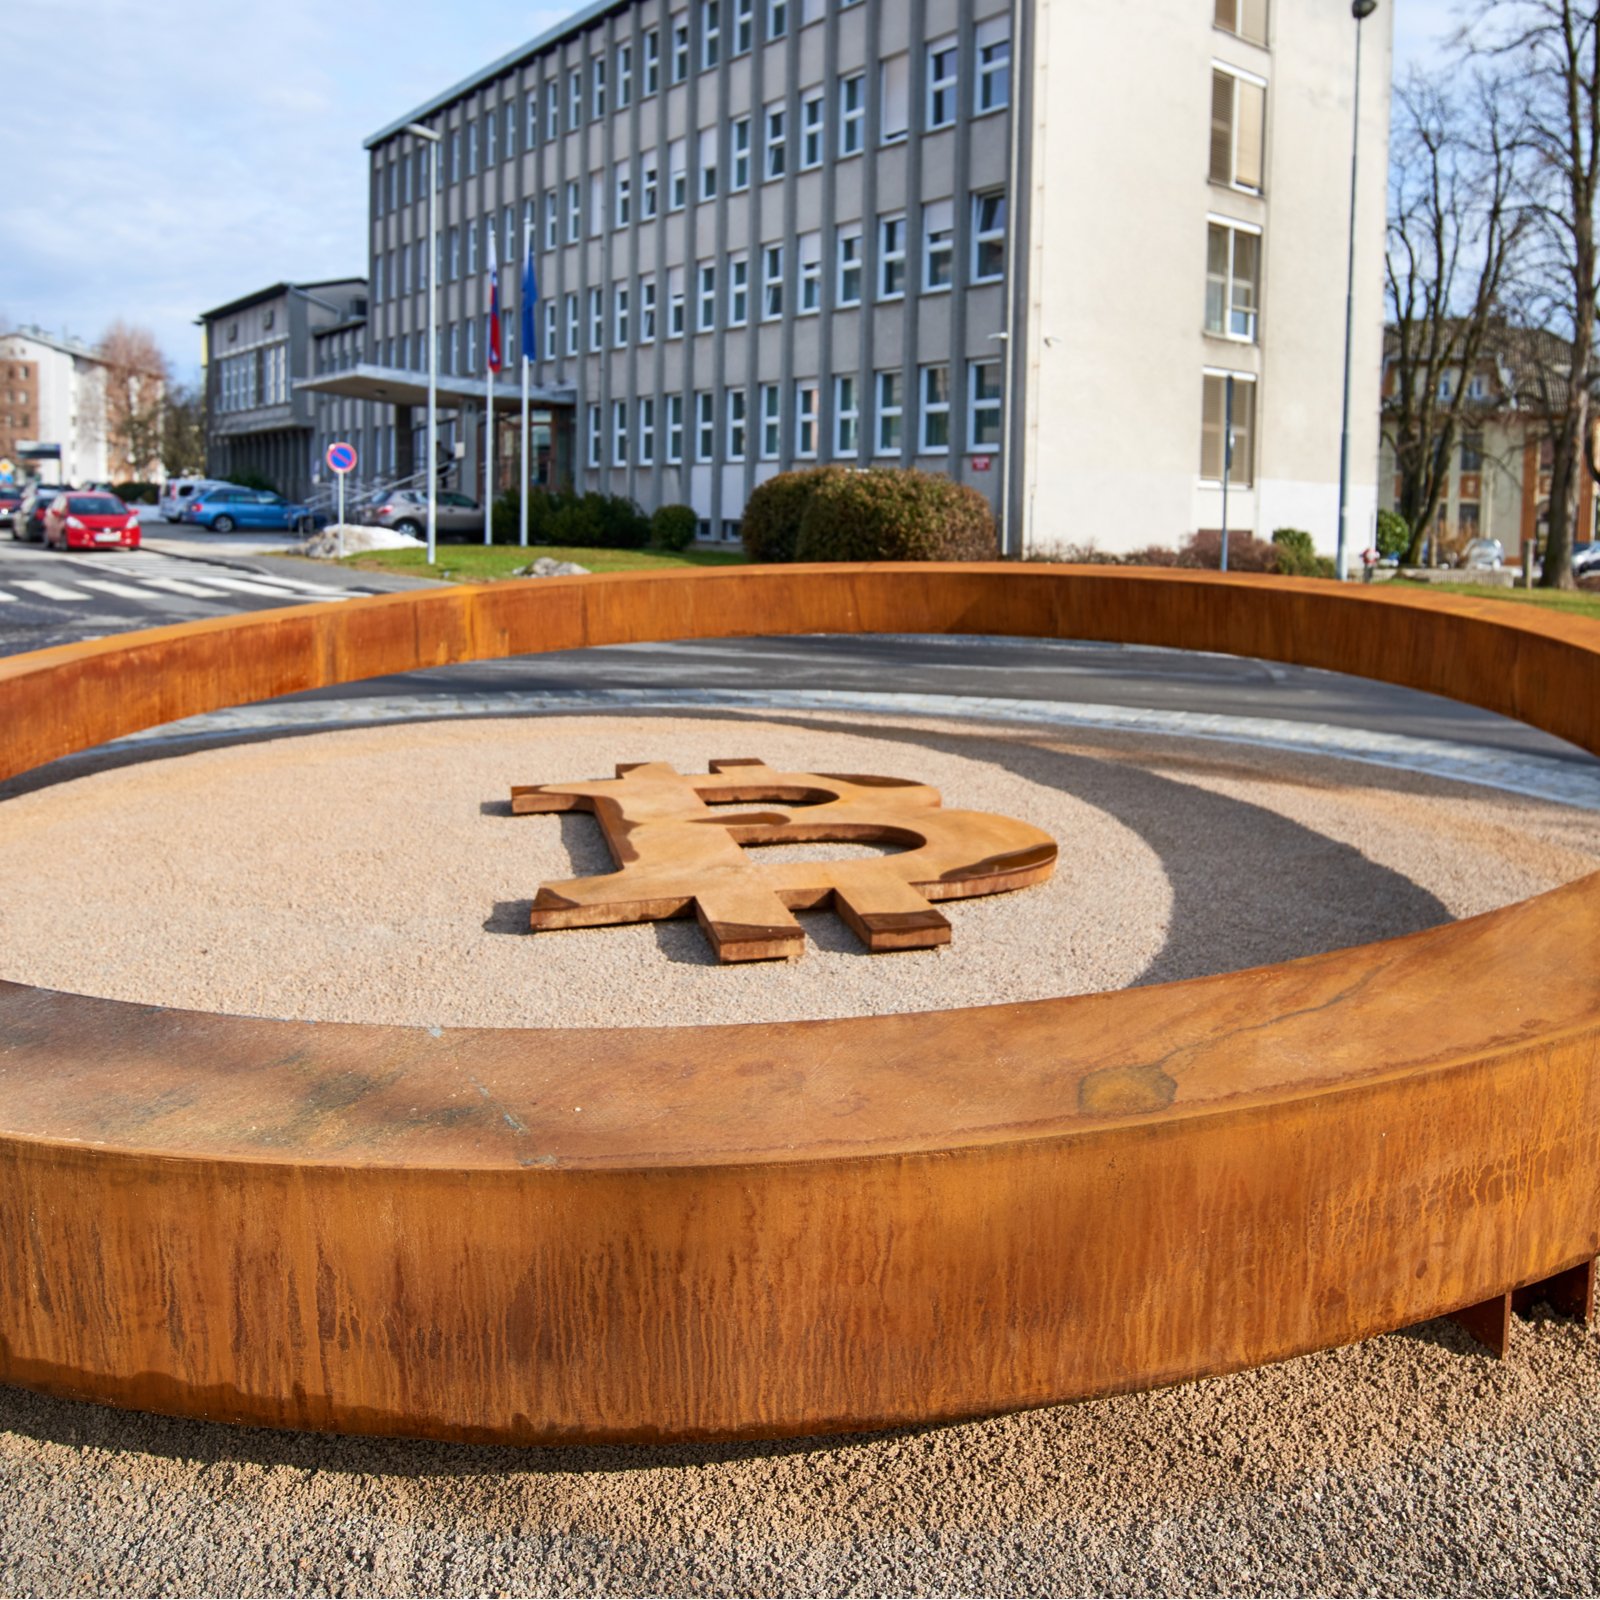 Slovenian City Unveils World's First Public Bitcoin Monument